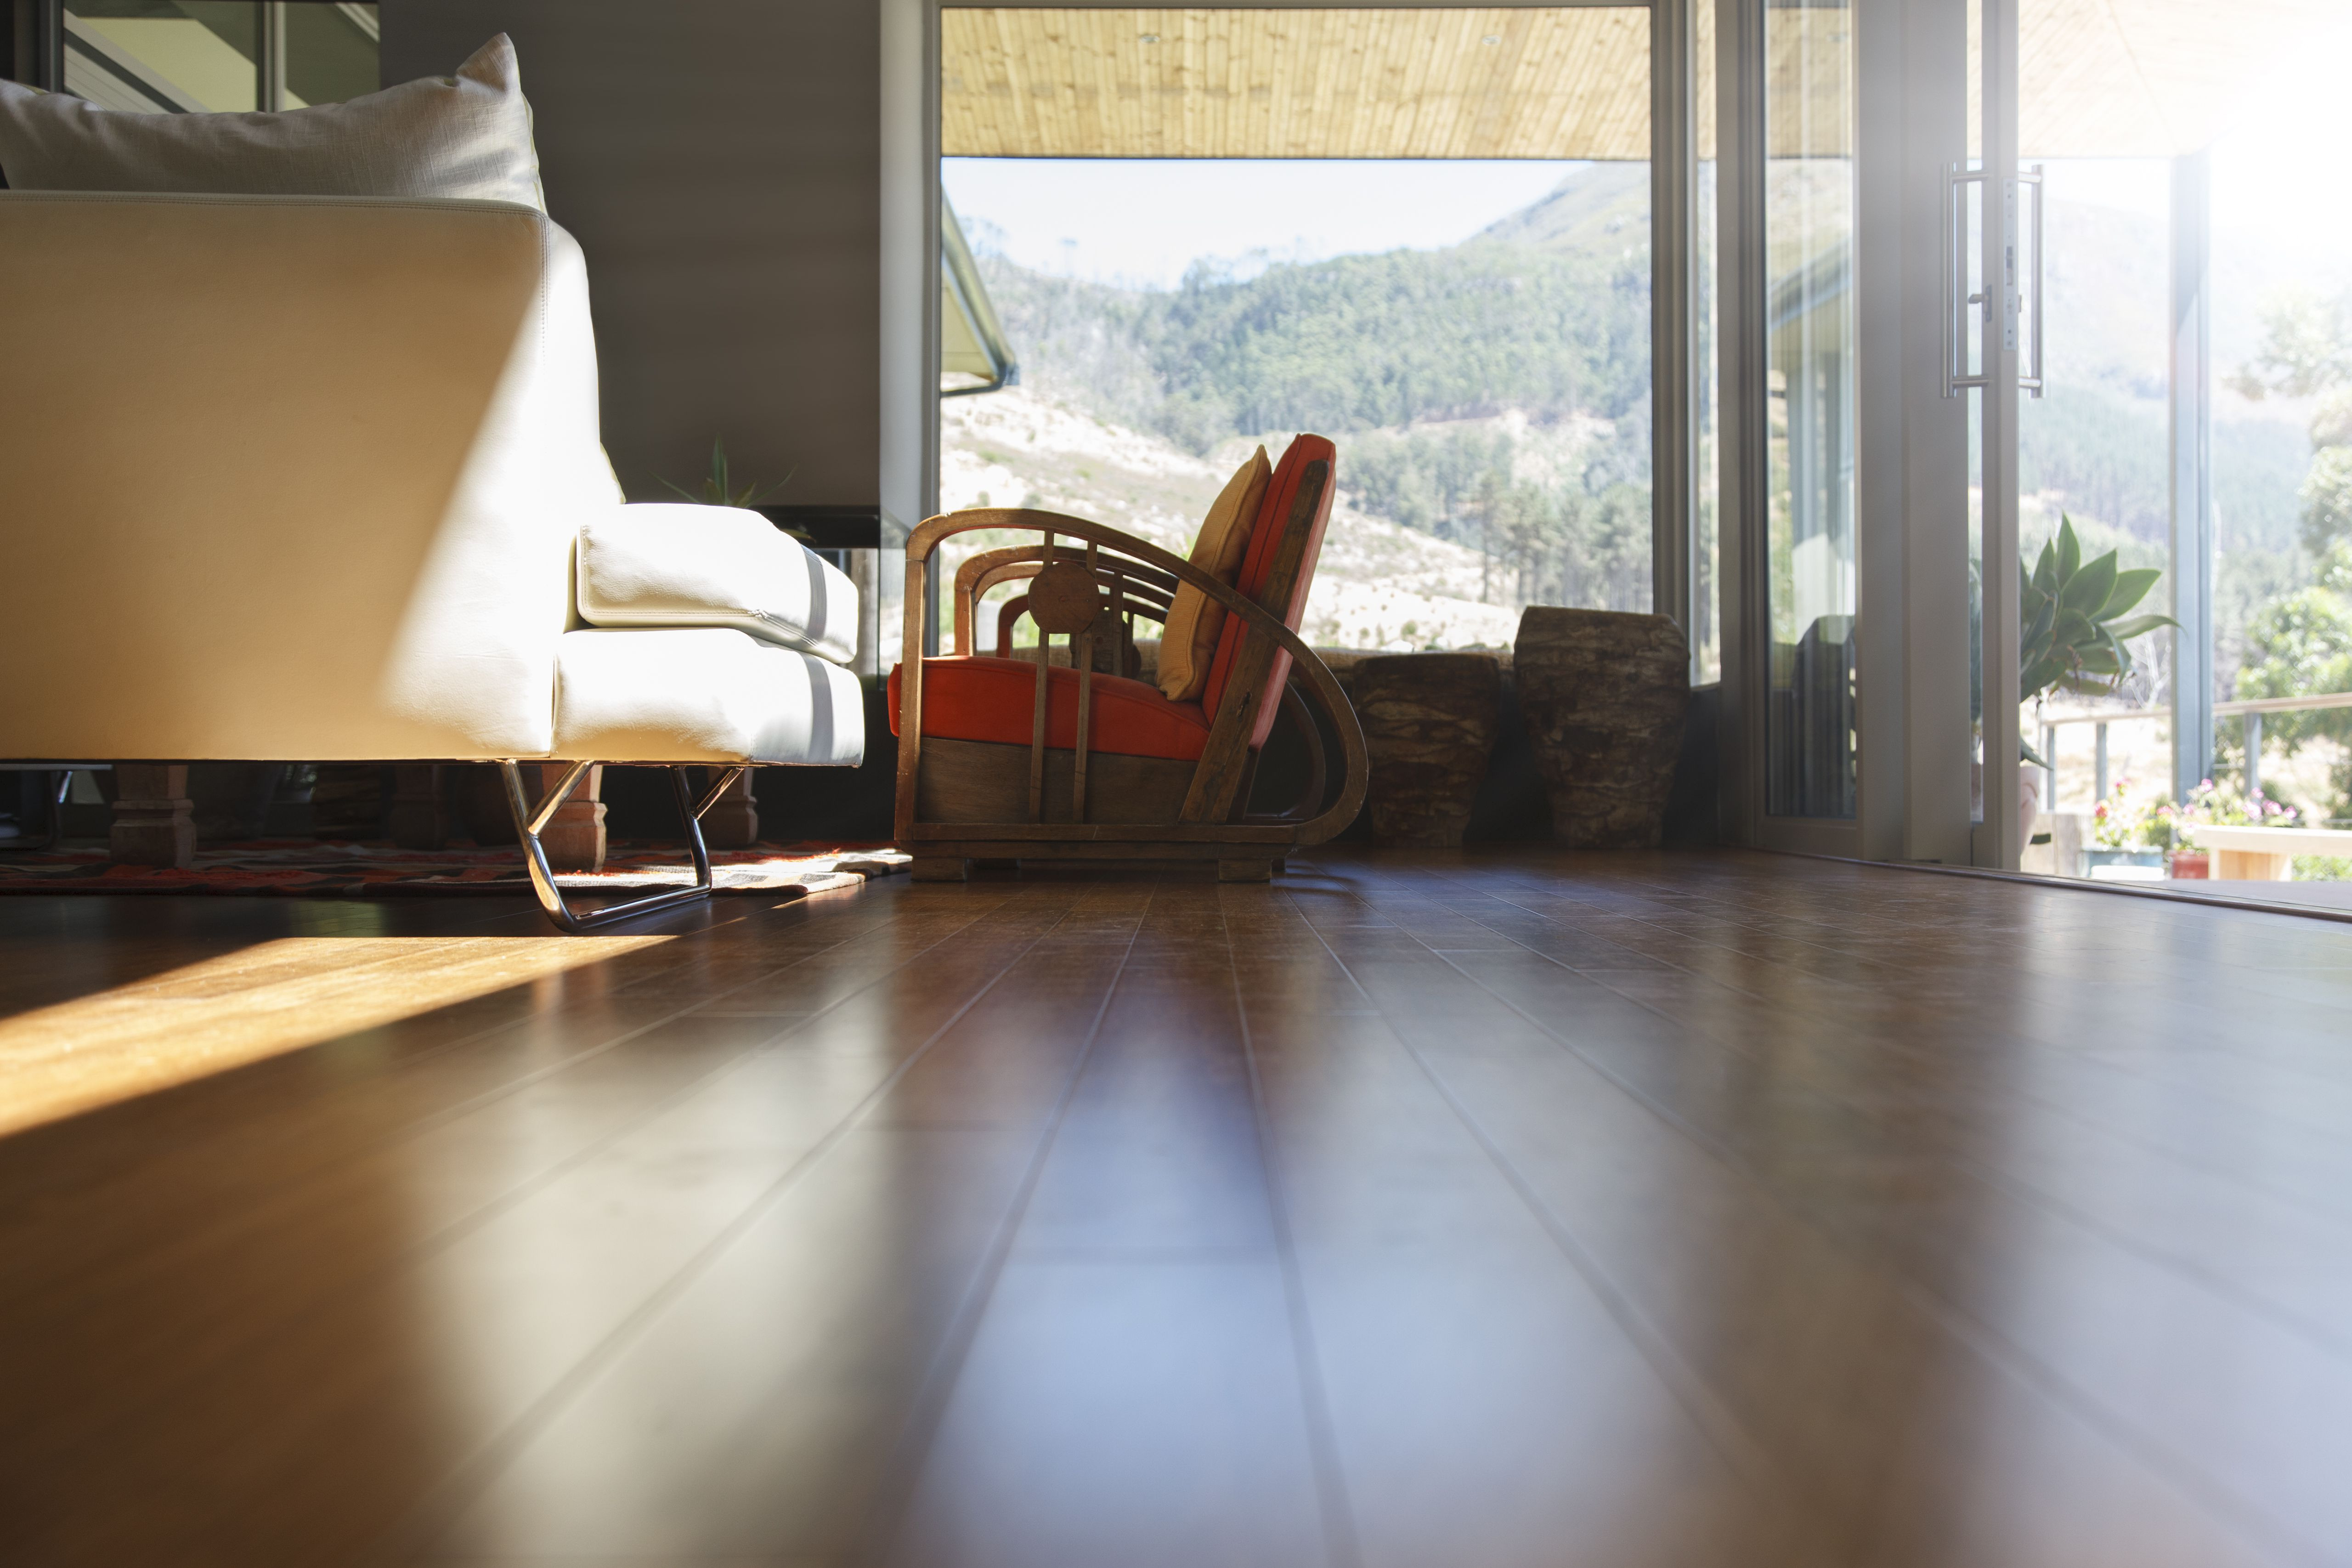 hardwood flooring glue price of types of engineered flooring from premium hardwoods with regard to living room interior hard wood floor and sofa 525439899 5a764f241d64040037603c15